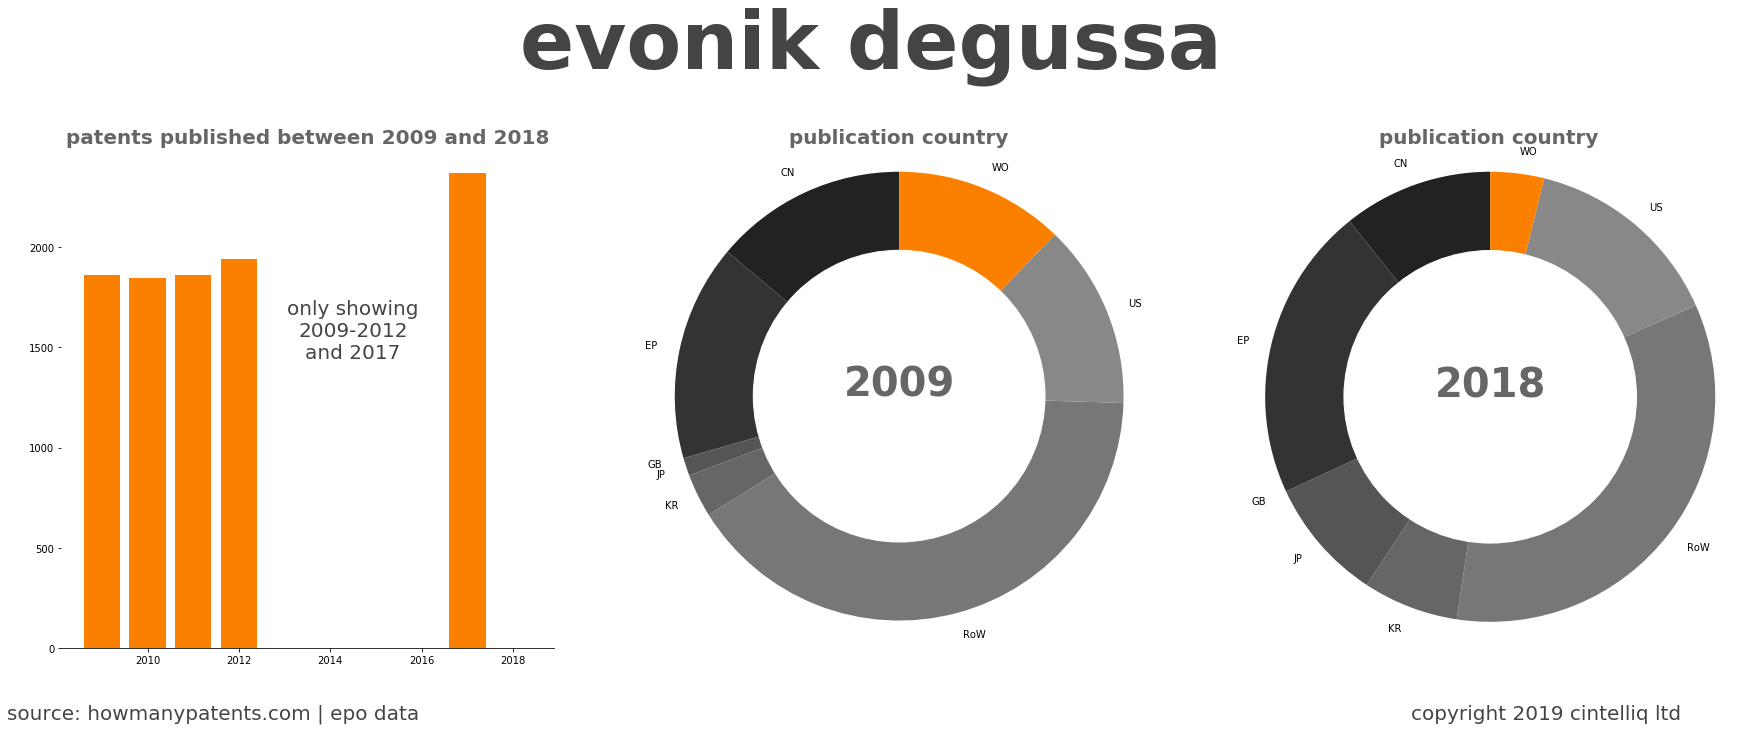 summary of patents for Evonik Degussa